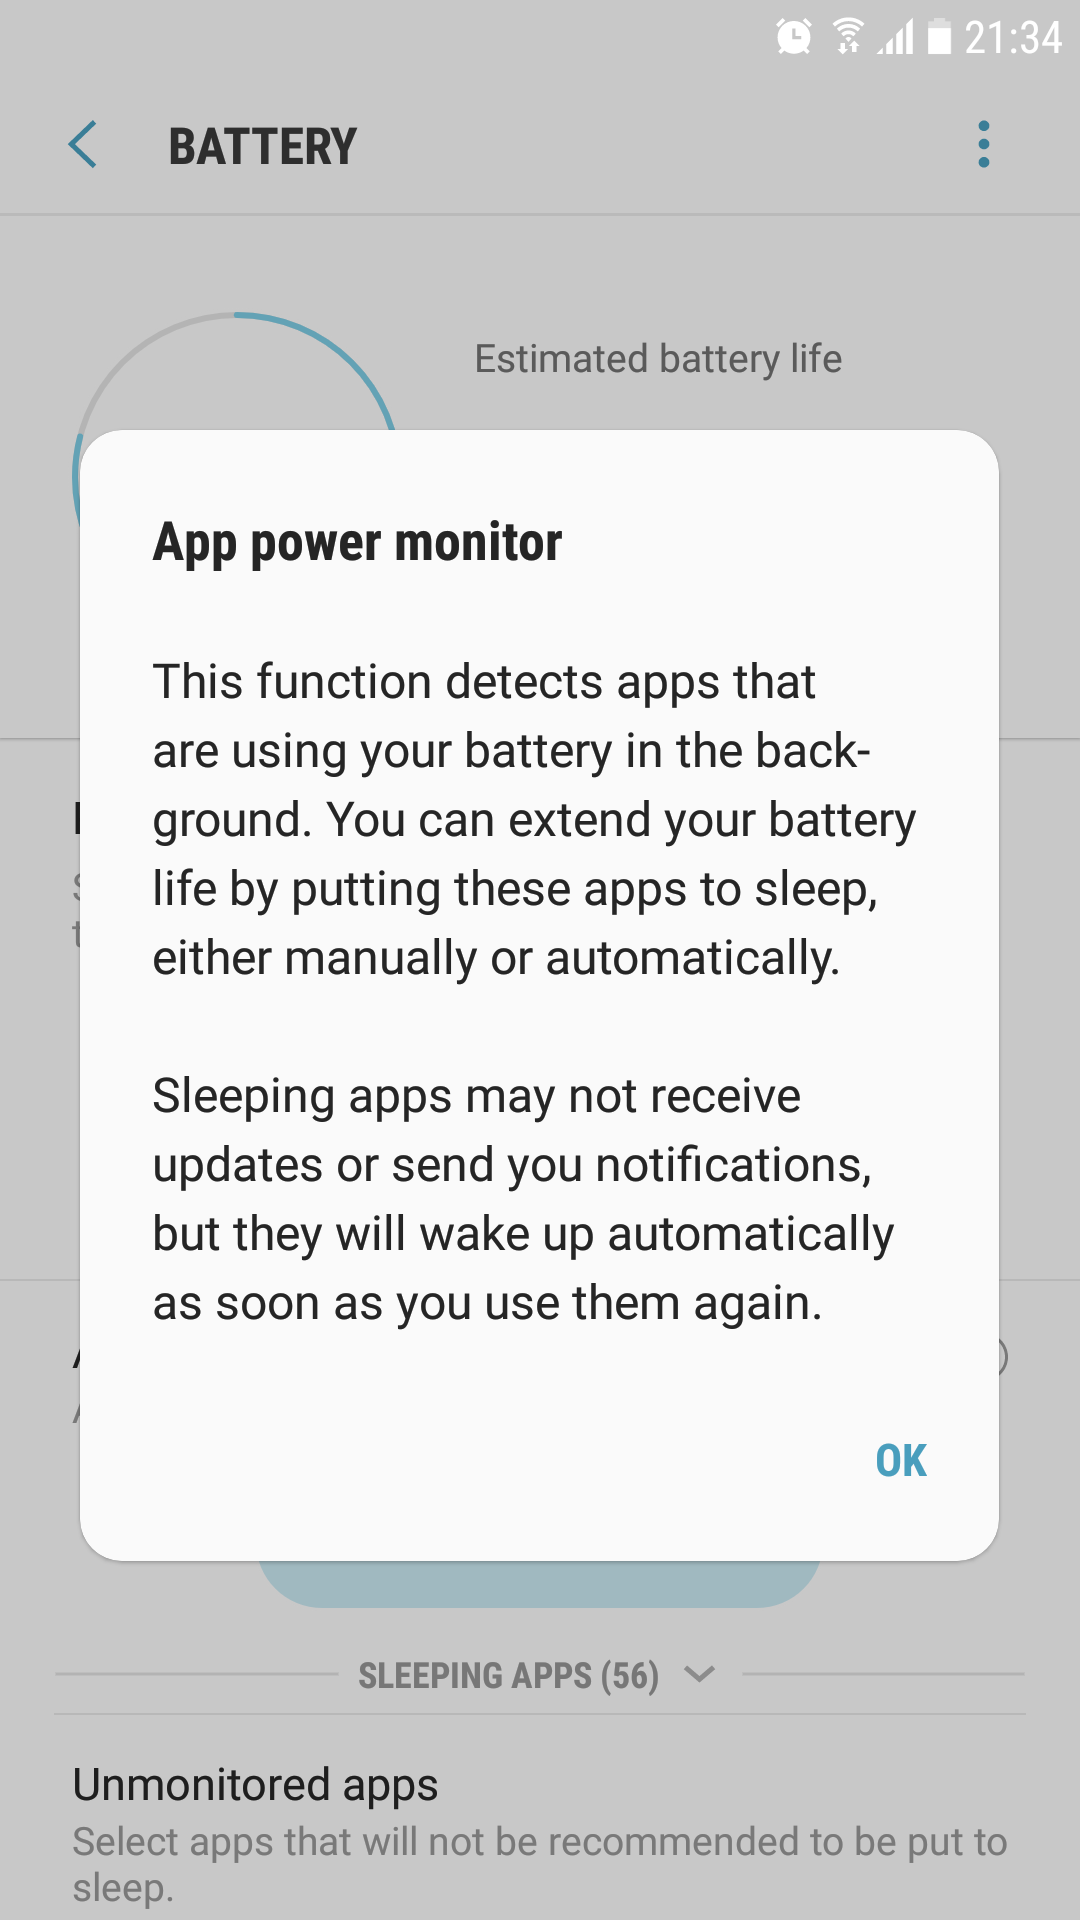 App power monitor info